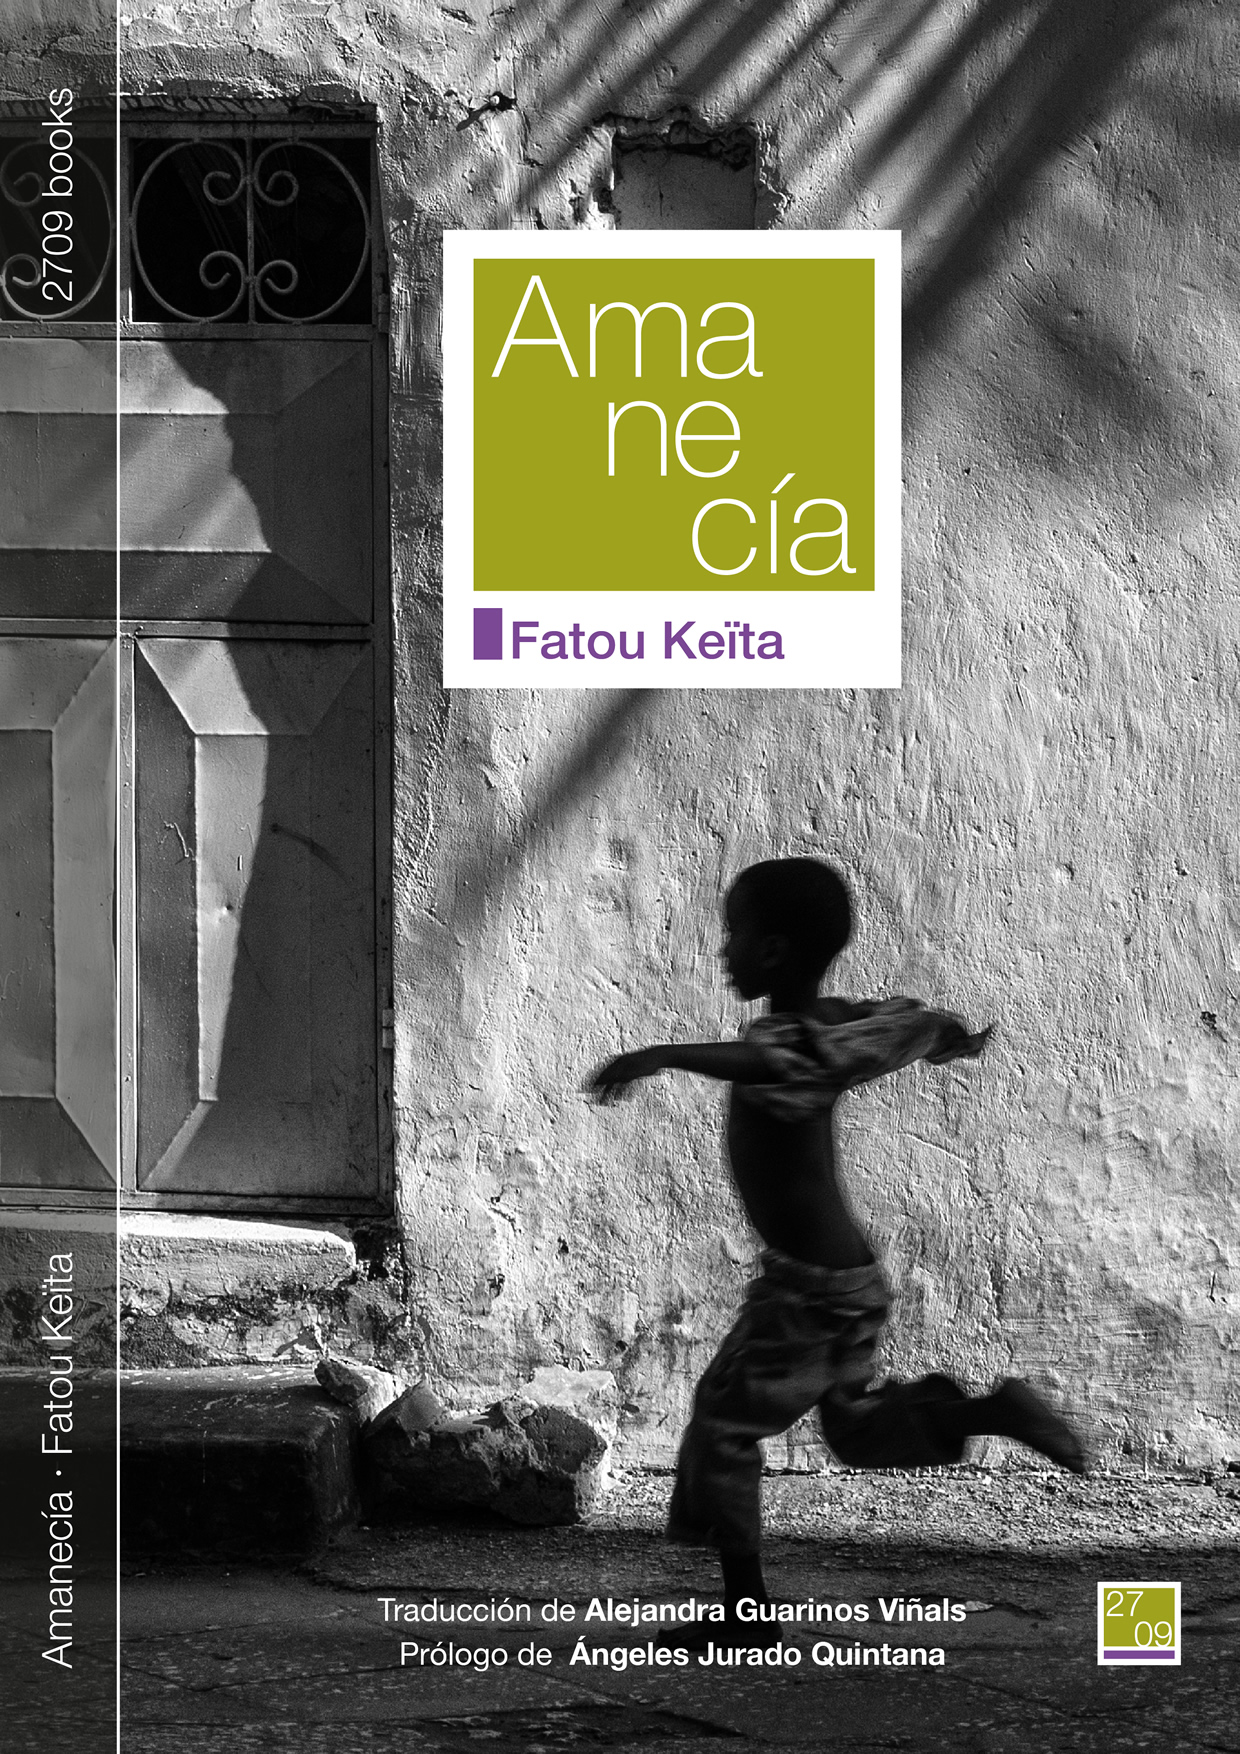 Cubierta - Amanecía - Fatou Keïta - 2709 books